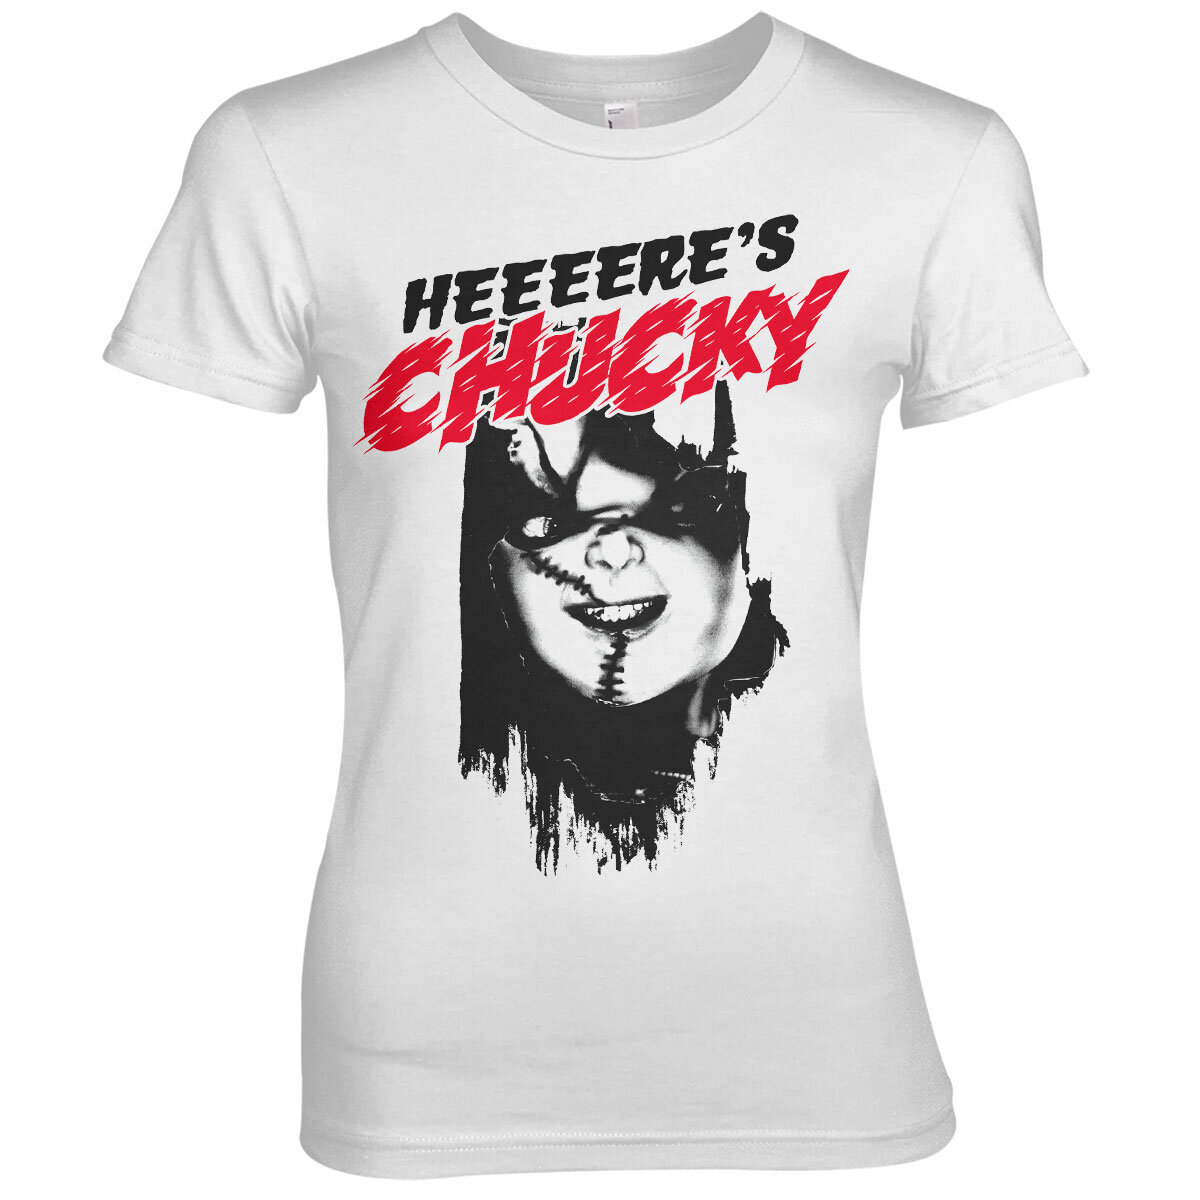 Heeere's Chucky Girly Tee